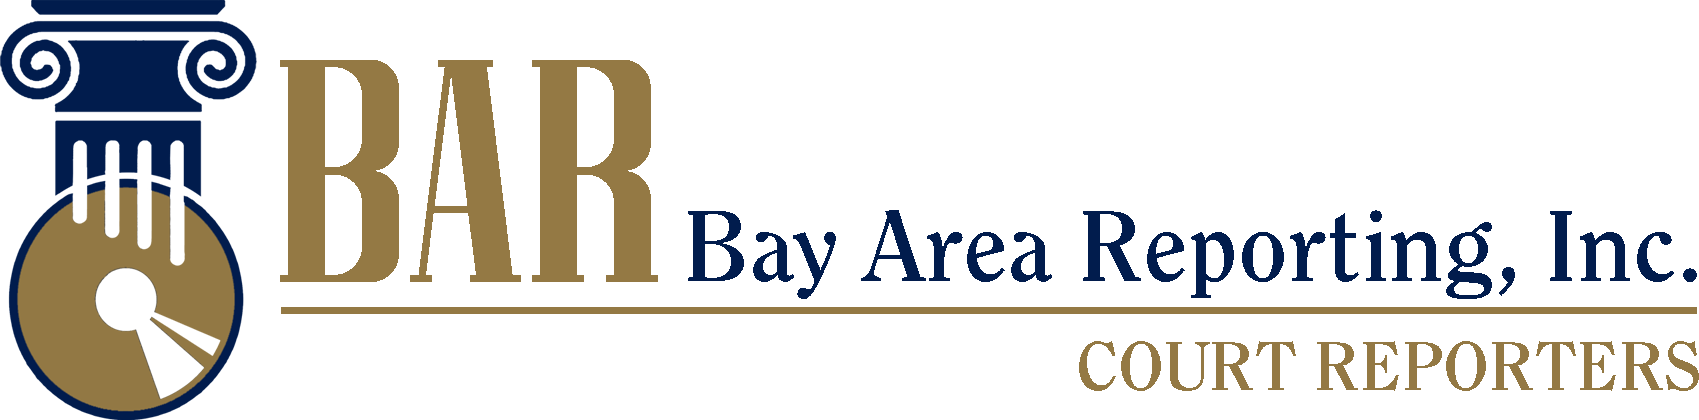 Bay Area Reporting logo